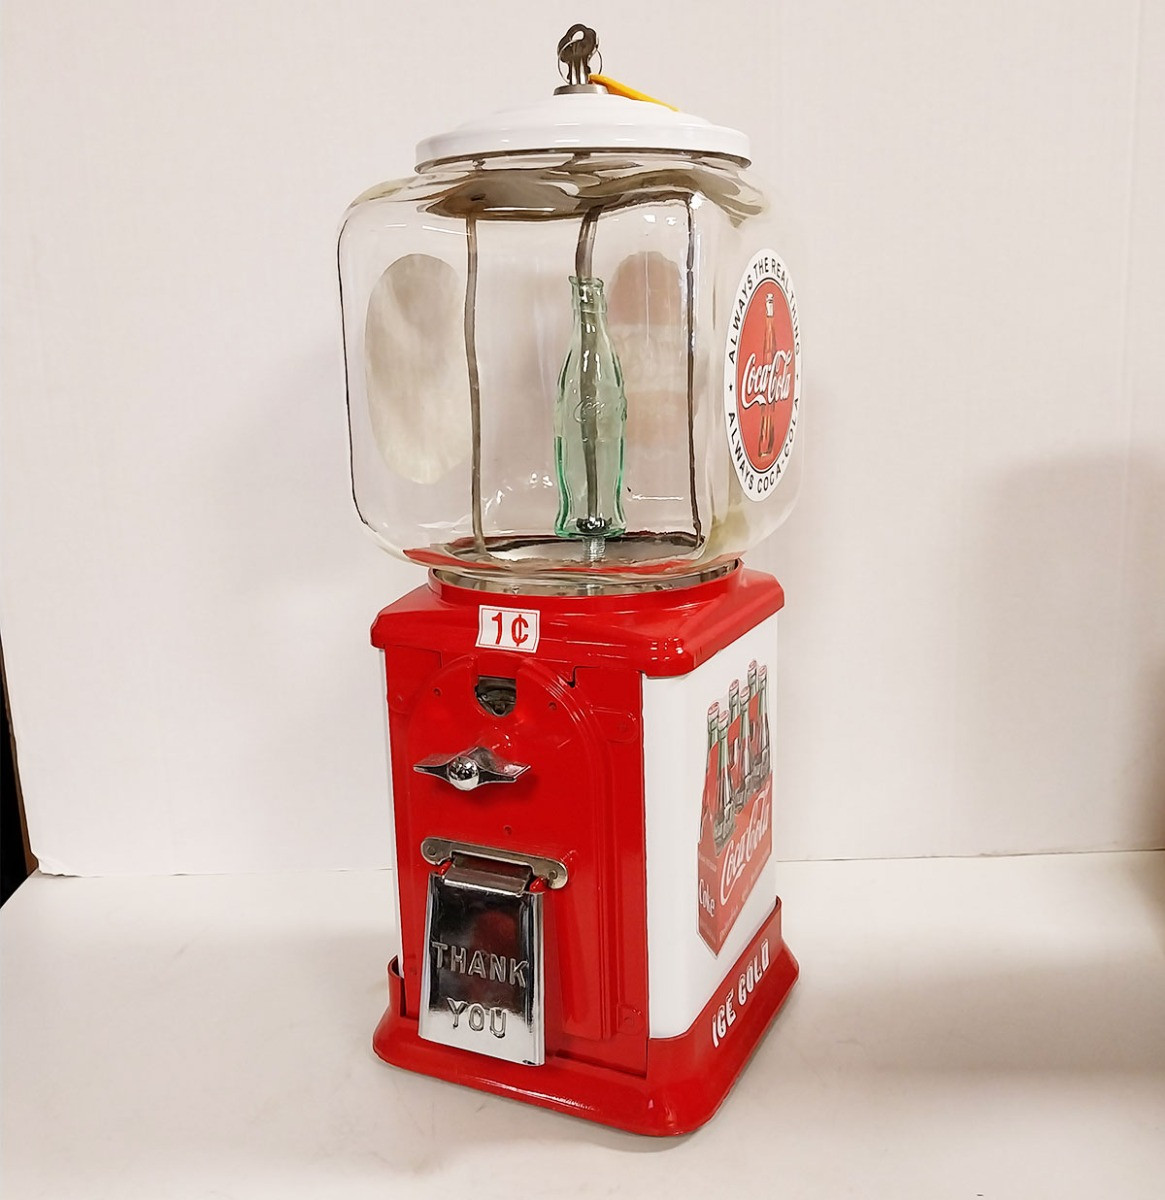 Snoep/Kauwgom Automaat met Coca-Cola Thema